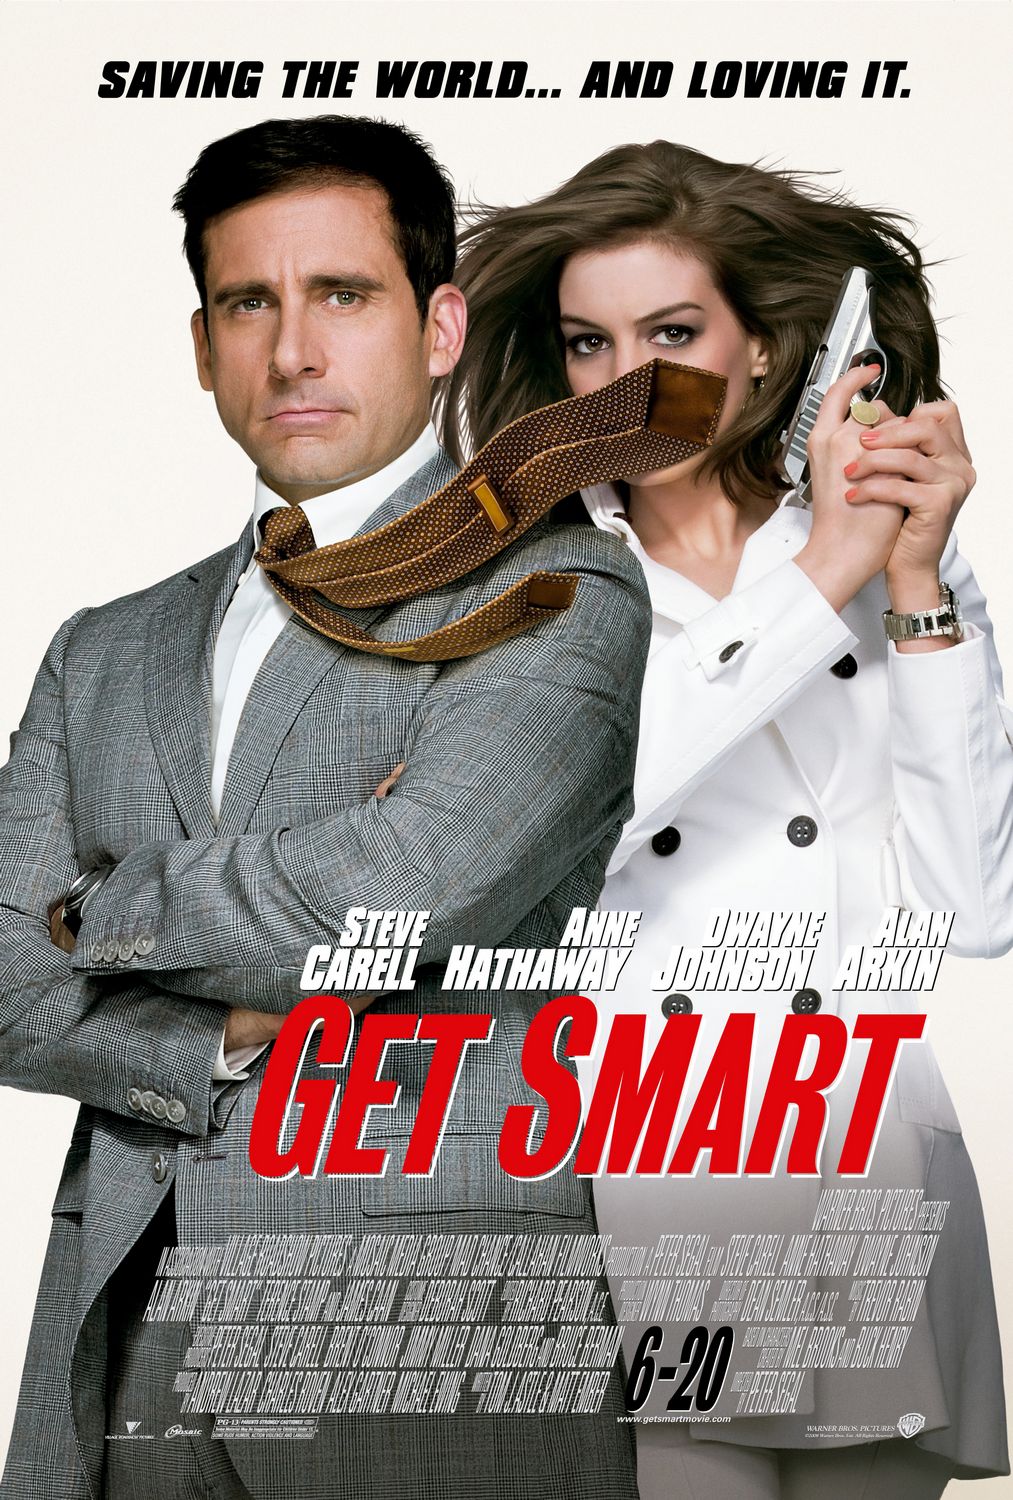 Get Smart (film) Warner Bros picture pic